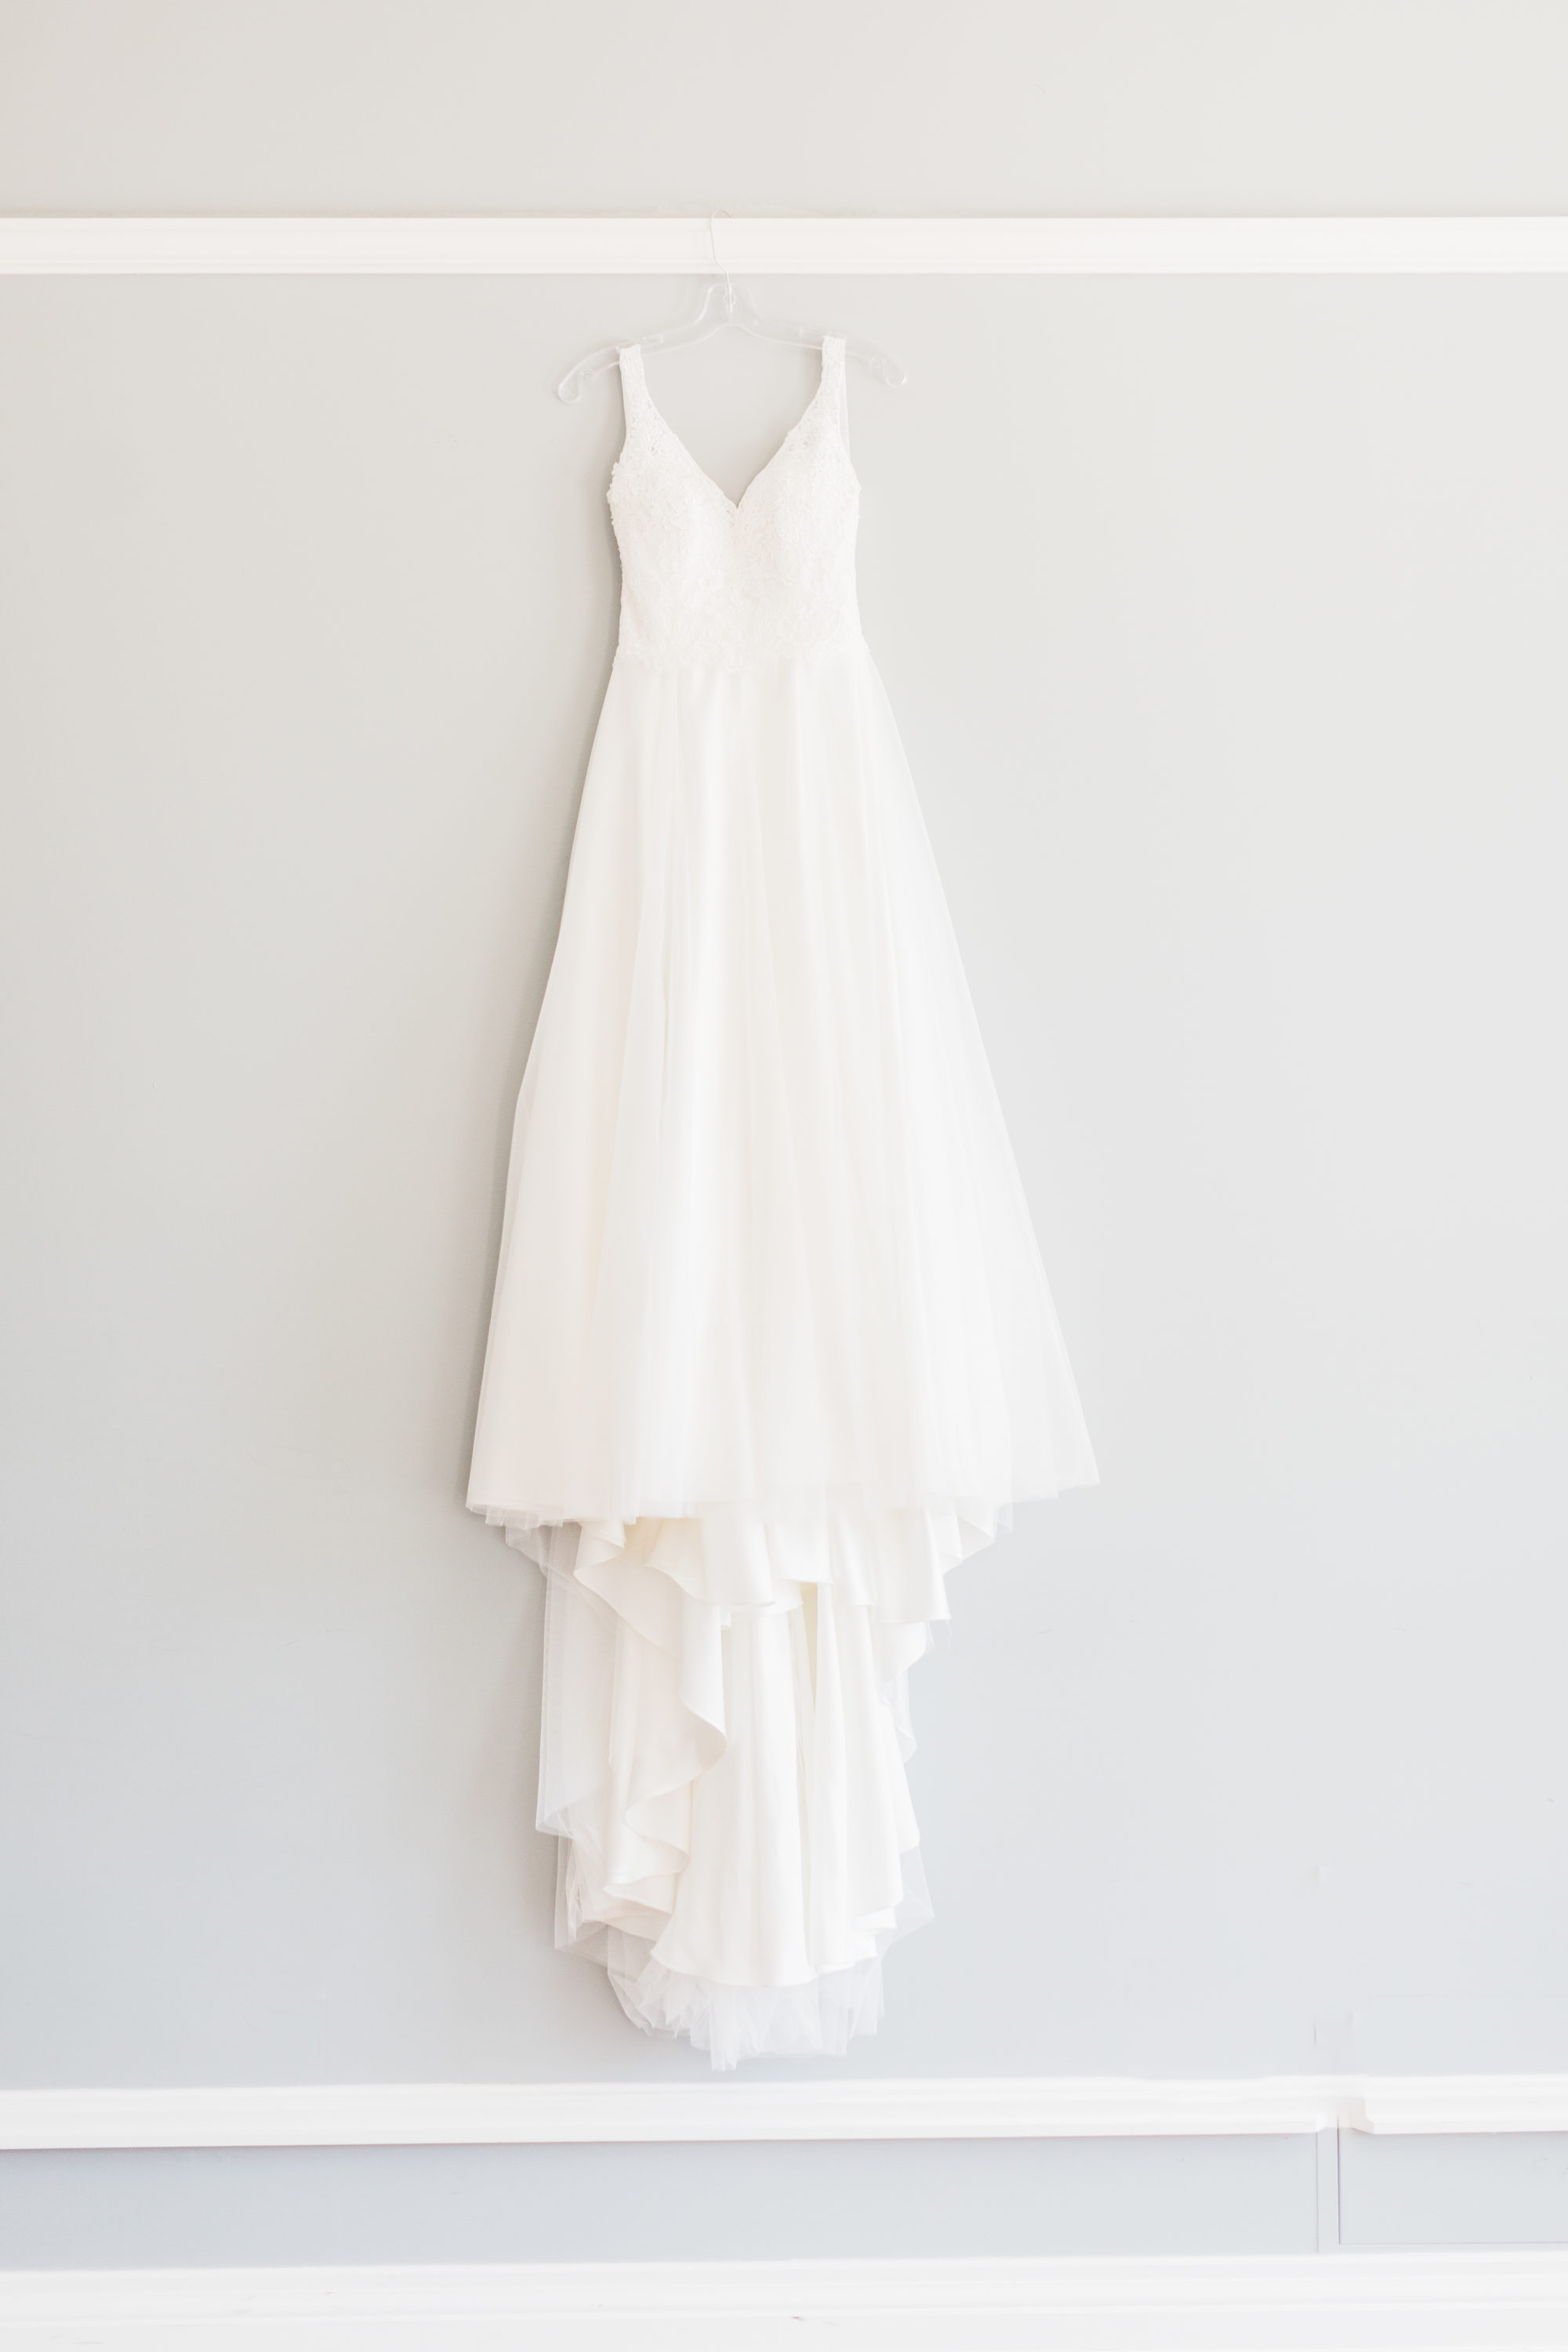 Wedding dress hanging on wall